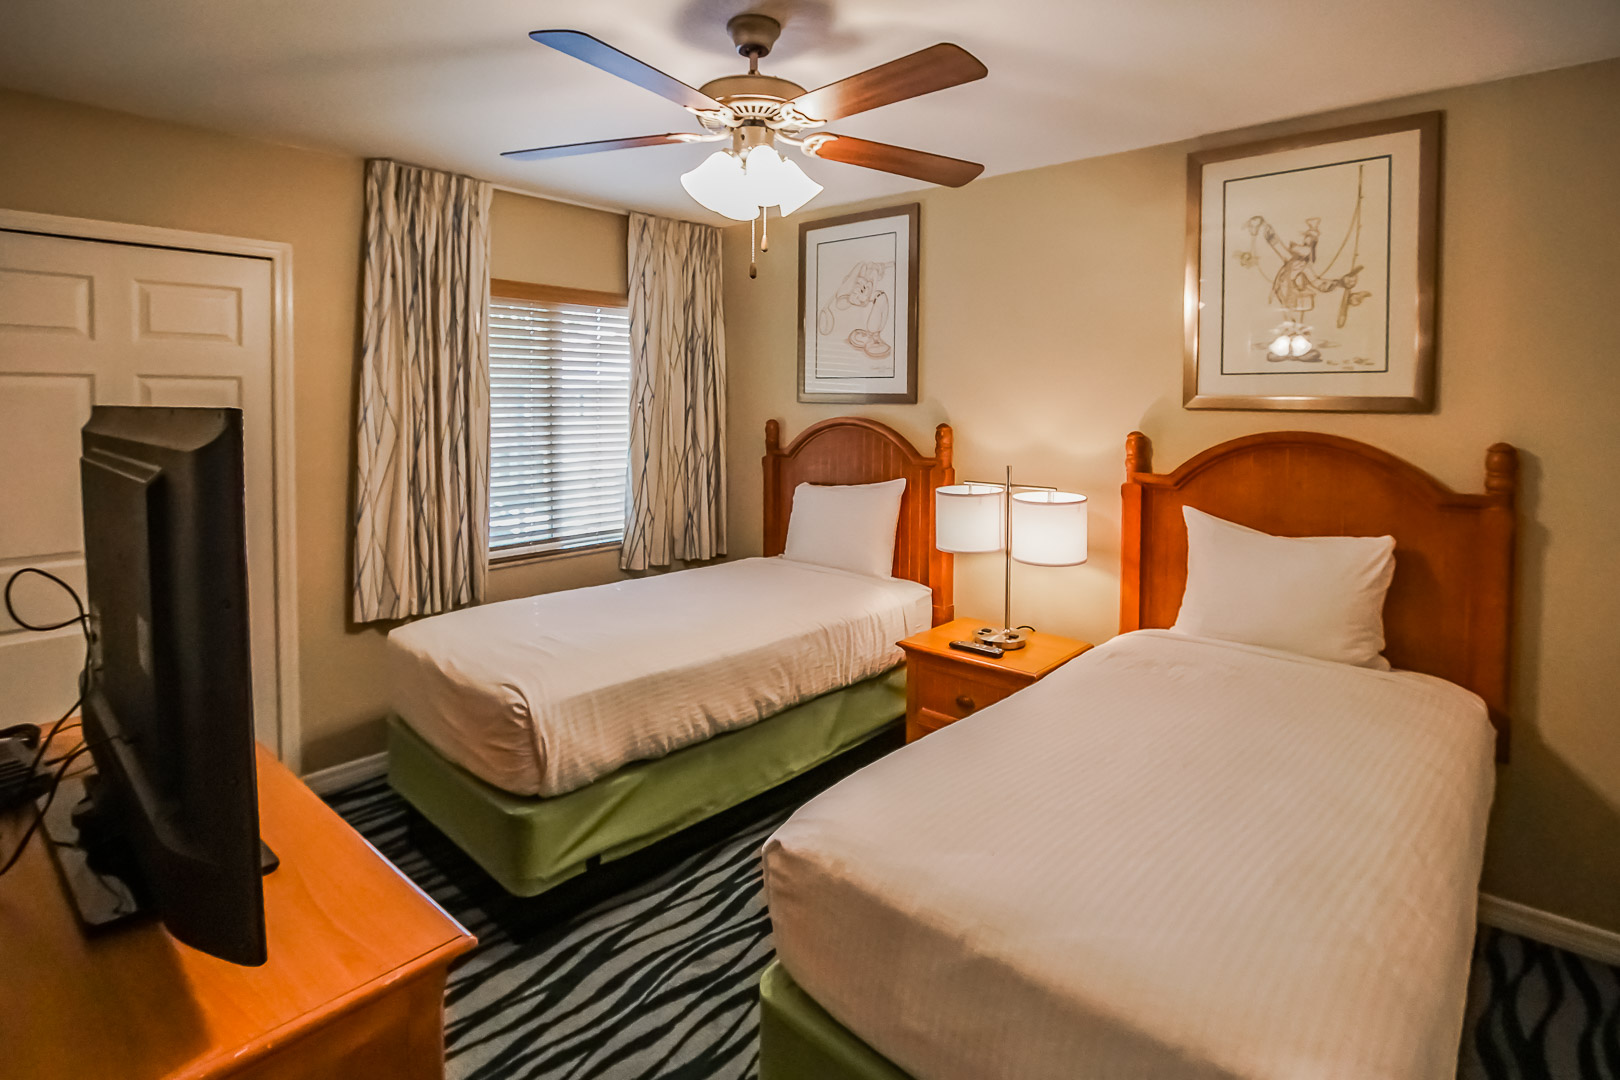 A spacious 2 bedroom unit at VRI's Fantasy World Resort in Florida.